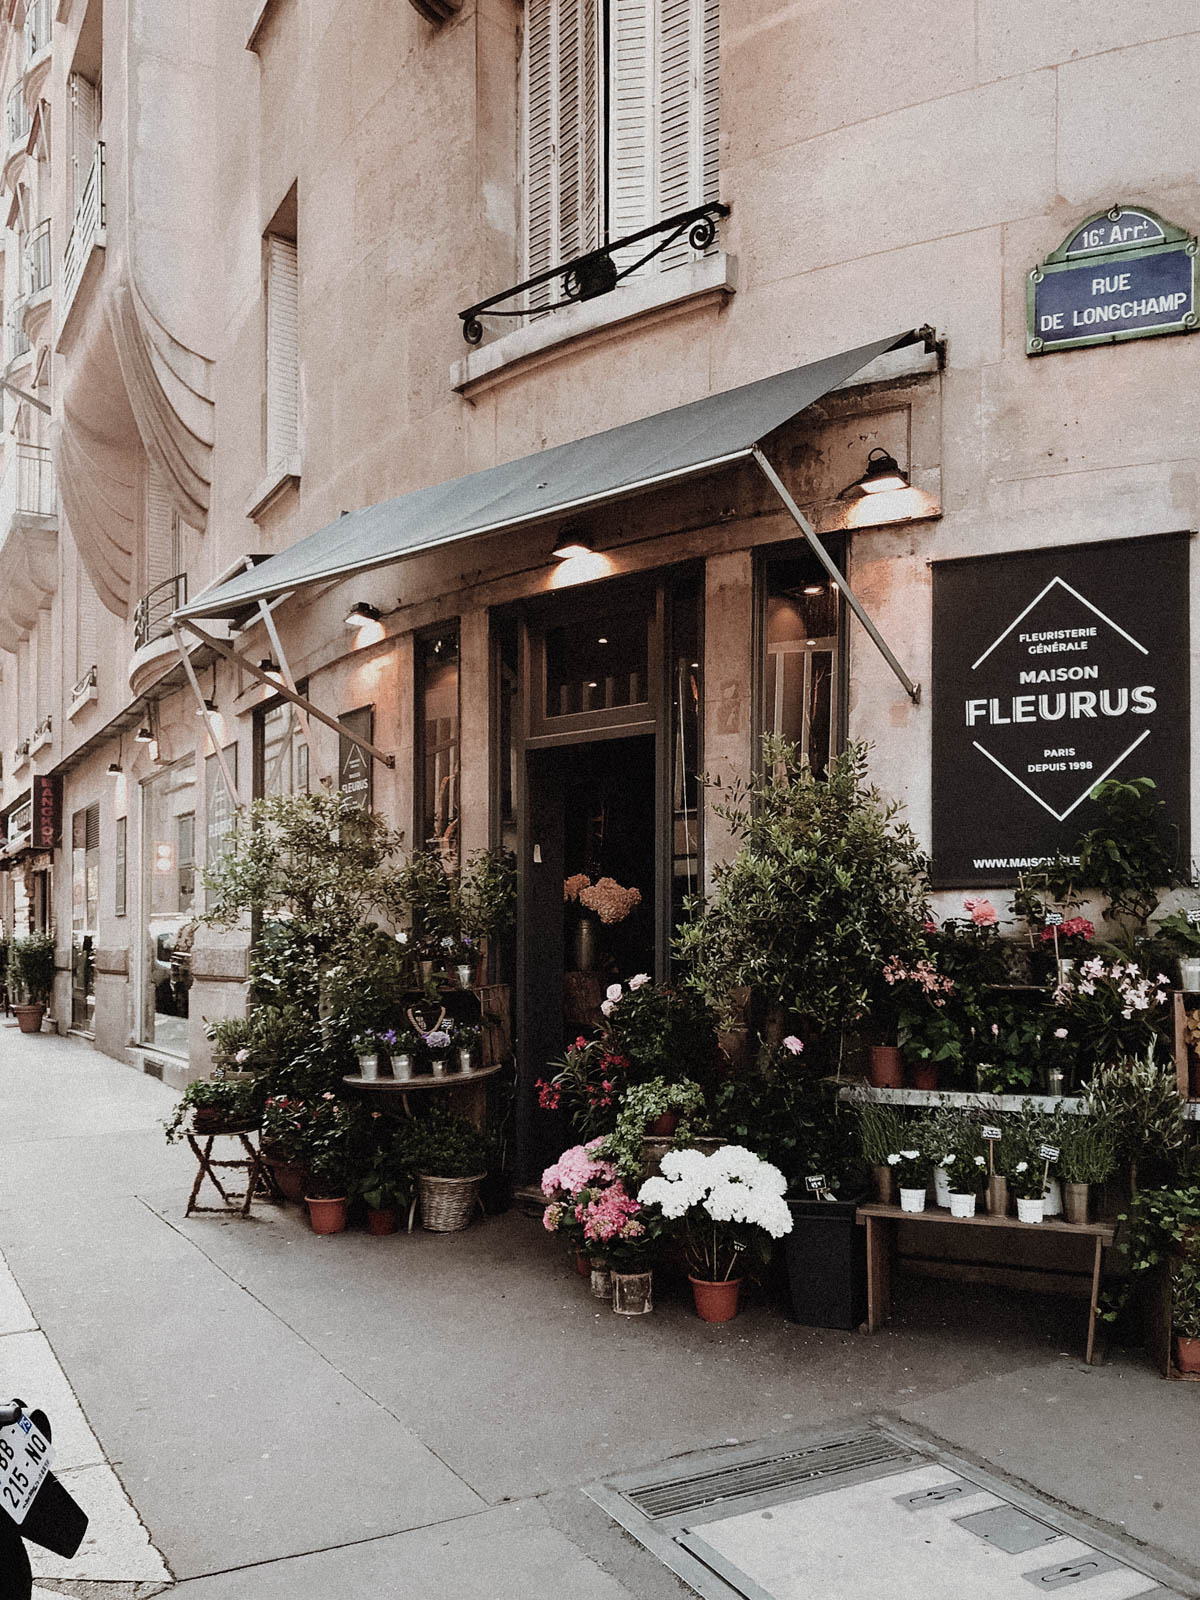 Paris France Travel Guide - Flower Shop, European Architecture and Buildings / RG Daily Blog